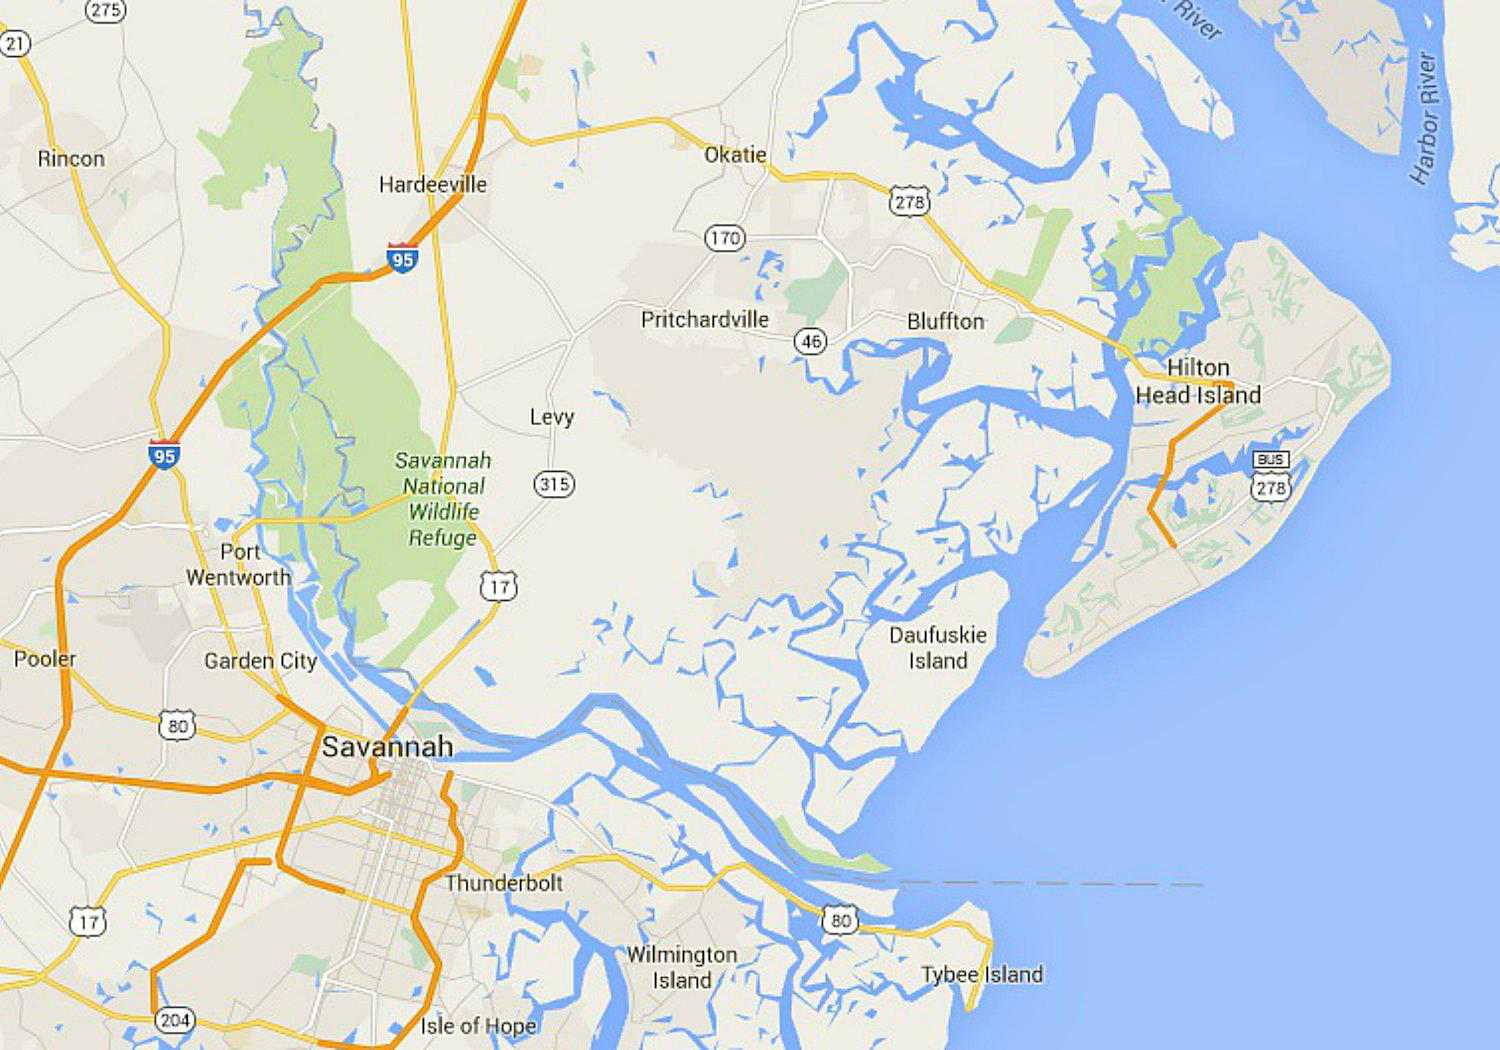 Maps Of Hilton Head Island, South Carolina - Hilton Head Florida Map